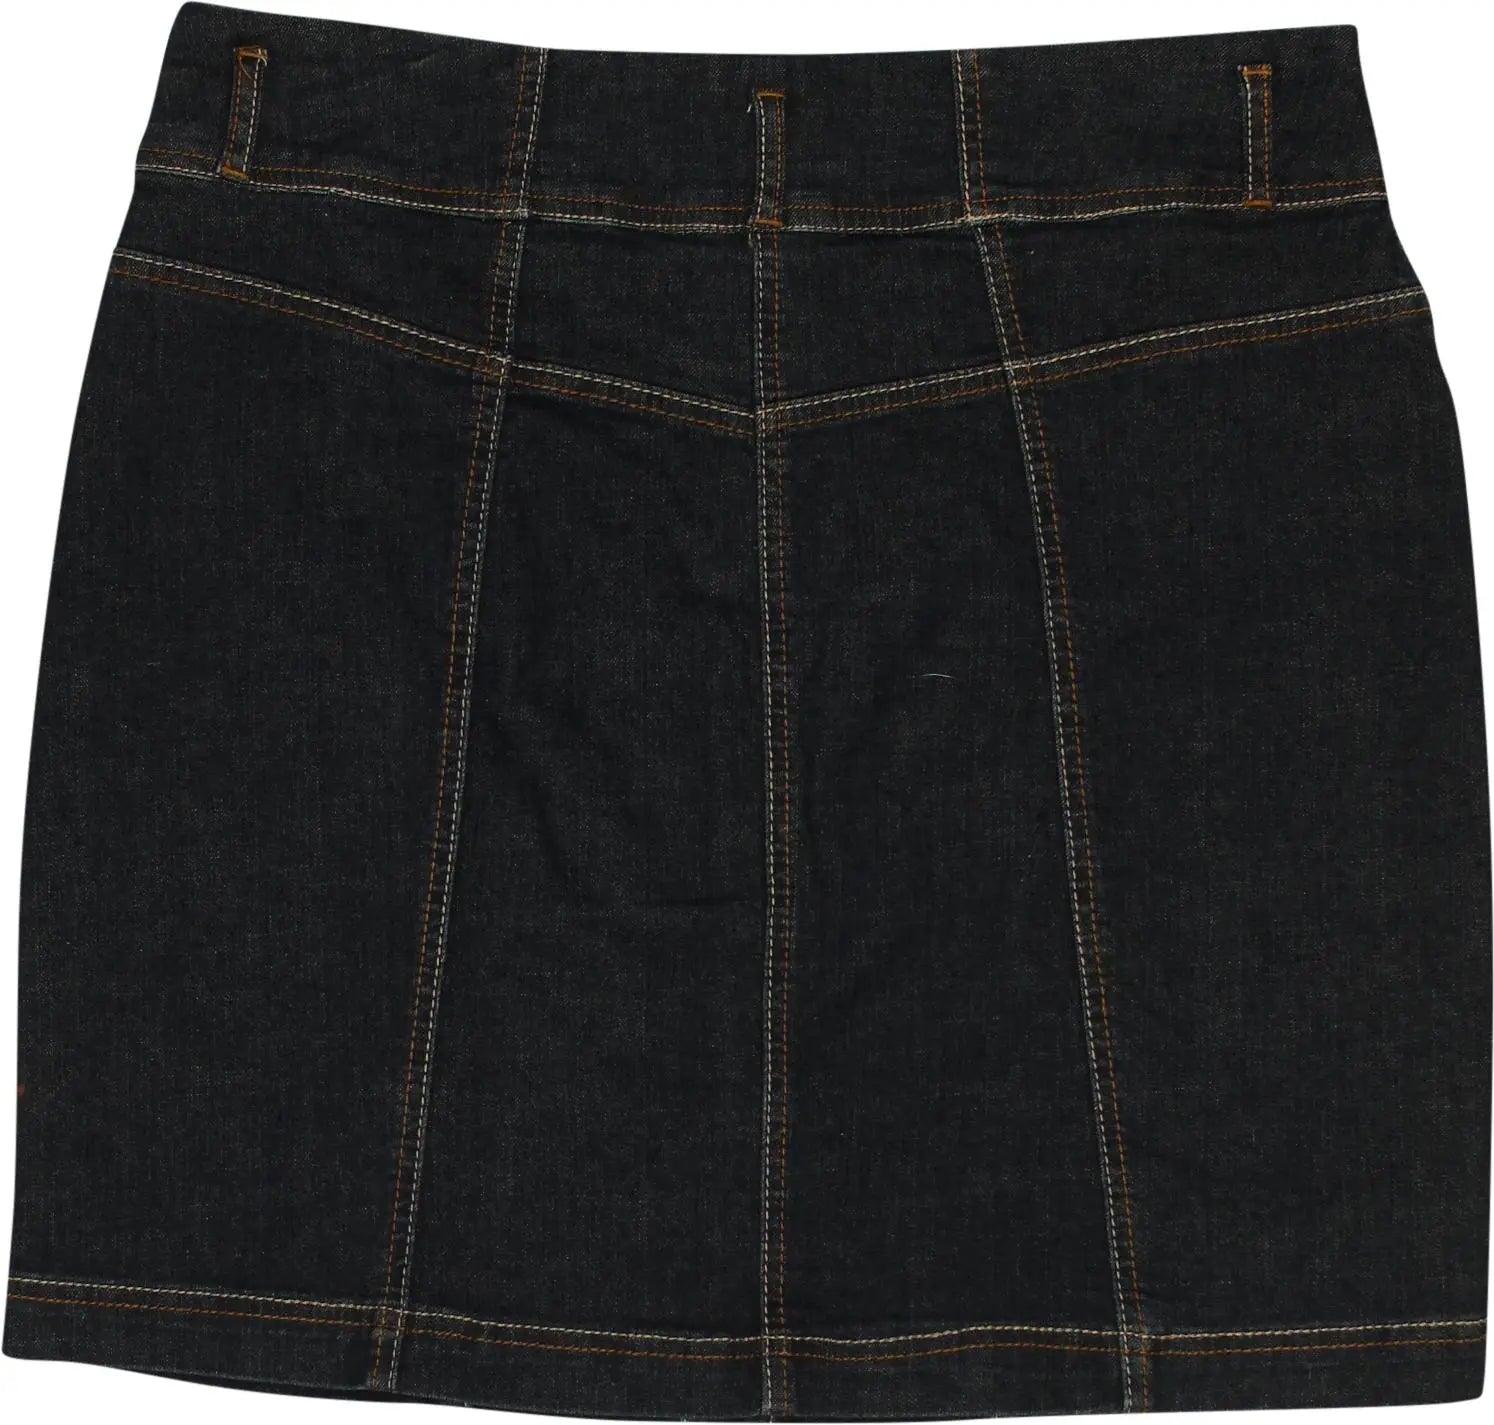 Miss Etam - Denim Skirt- ThriftTale.com - Vintage and second handclothing